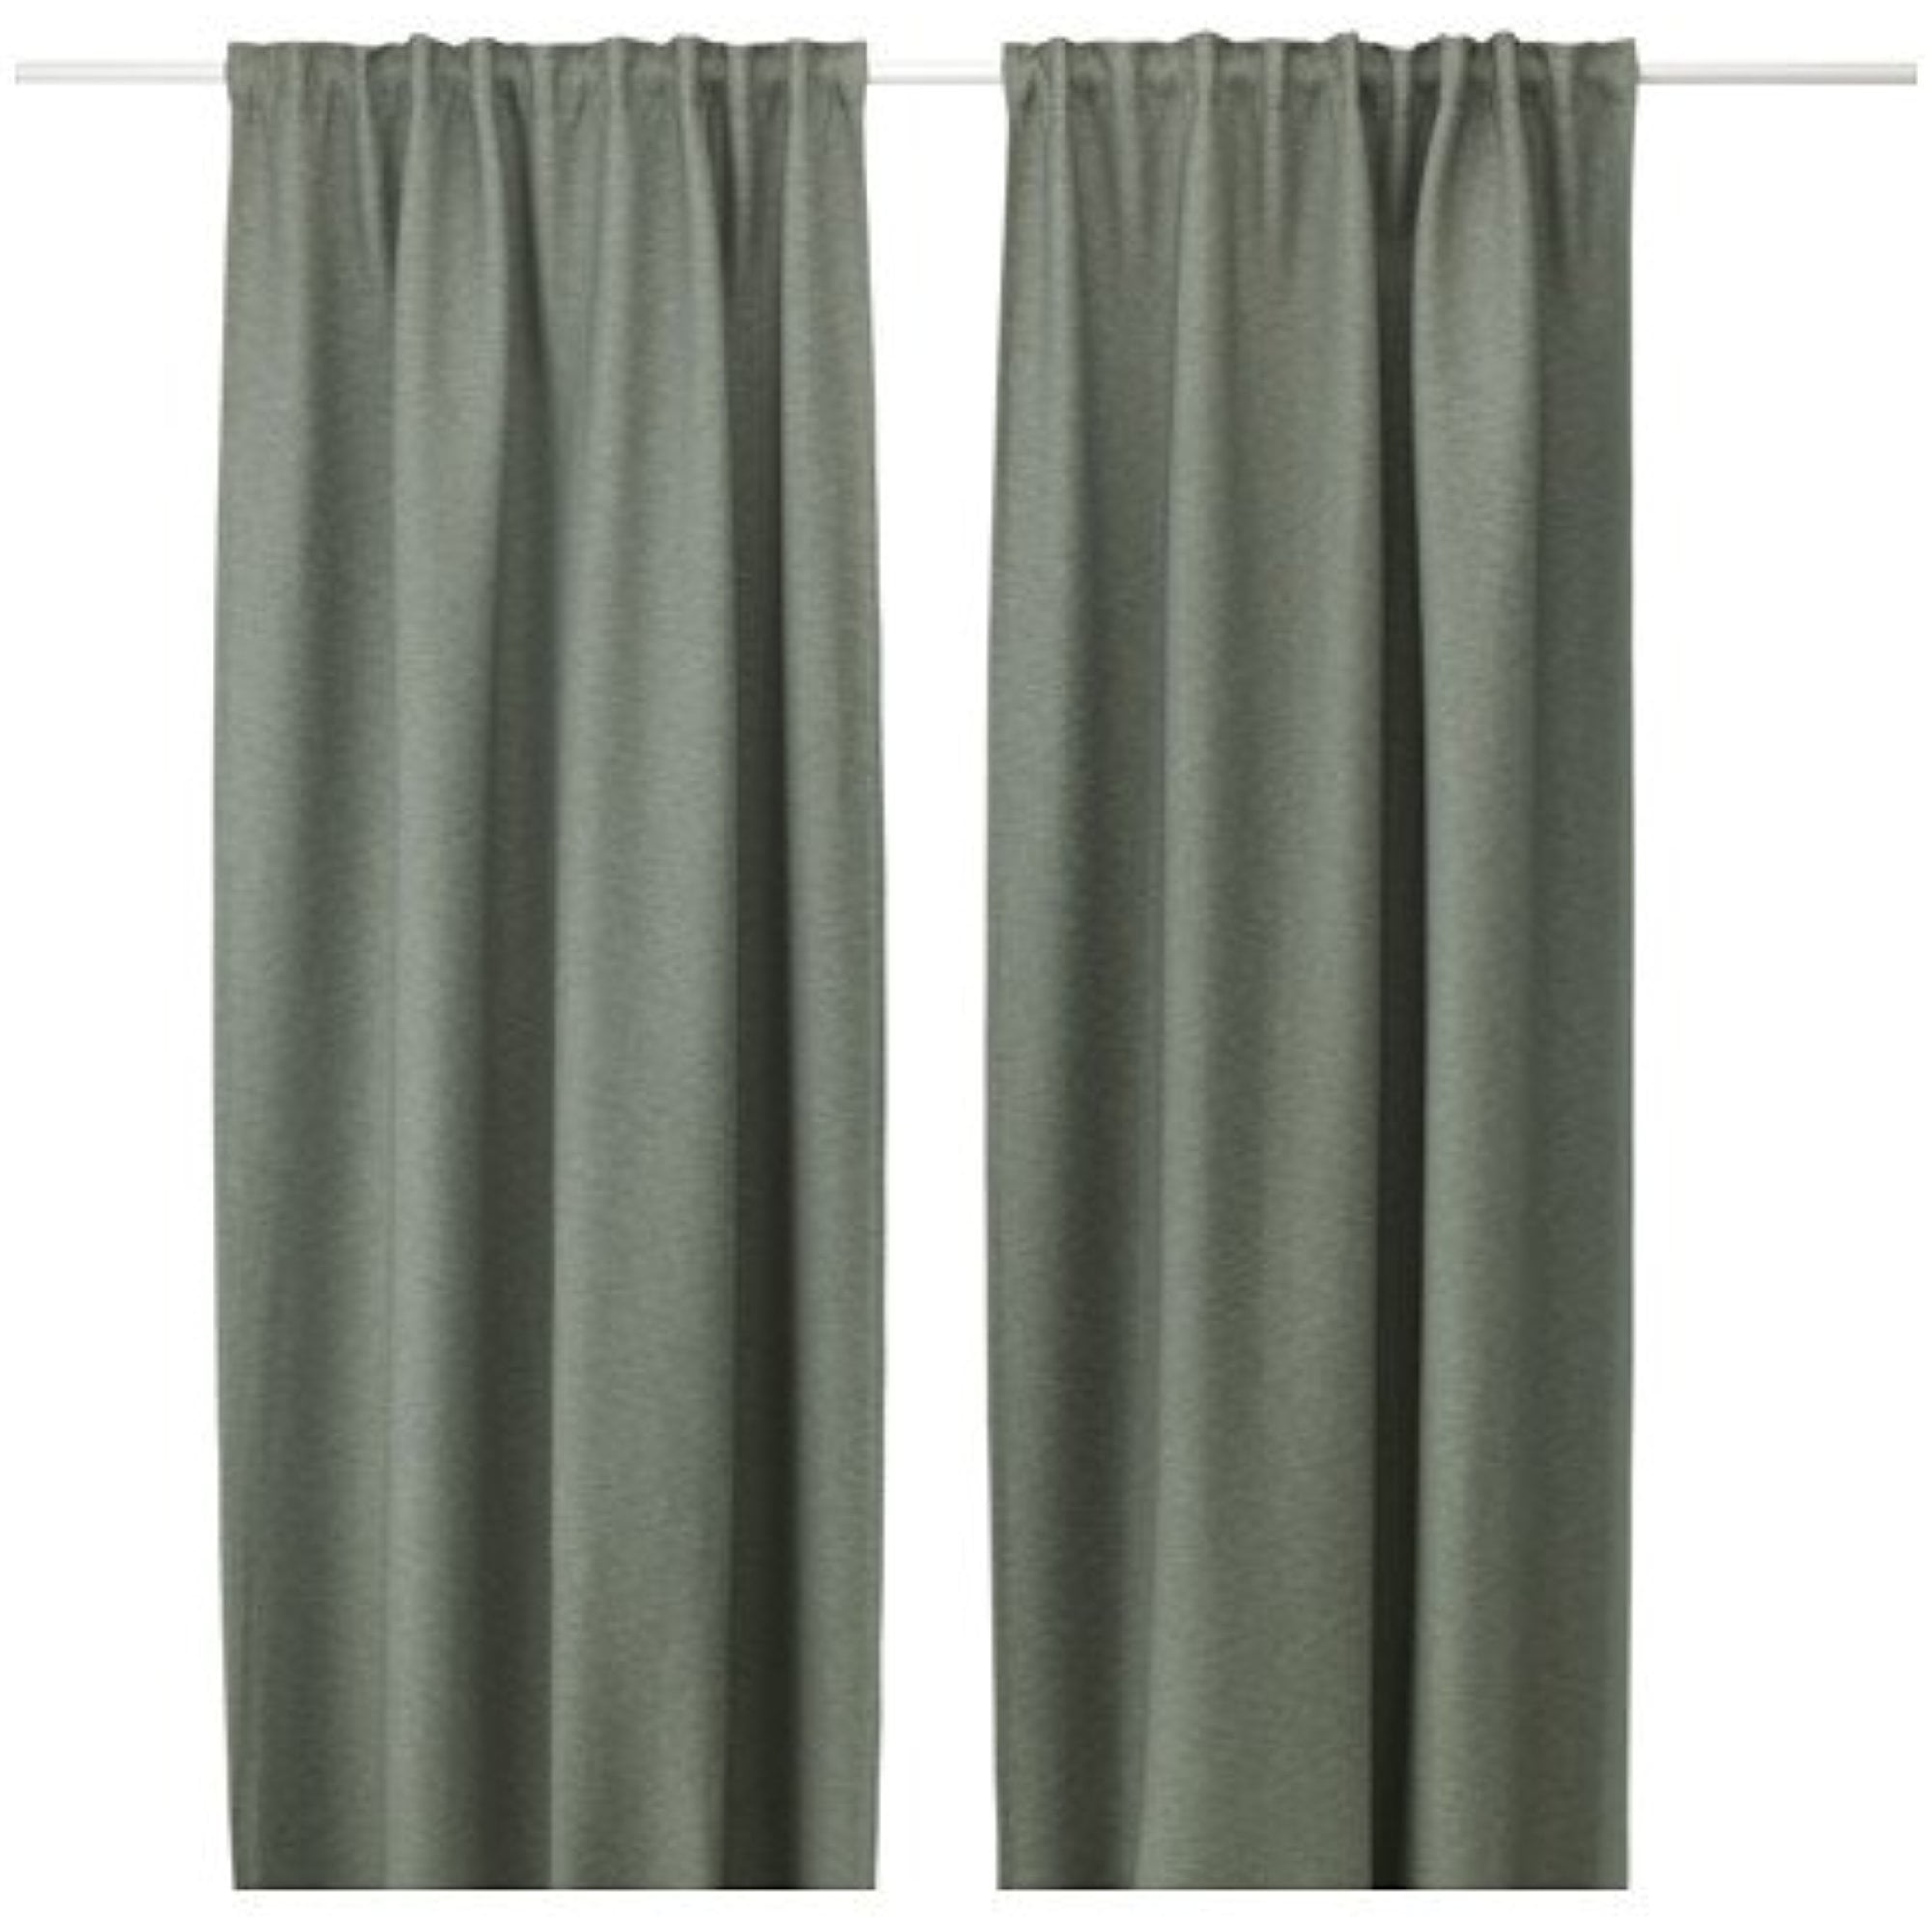 1 pair 57x98 NEW INGELINN Sheer curtains white